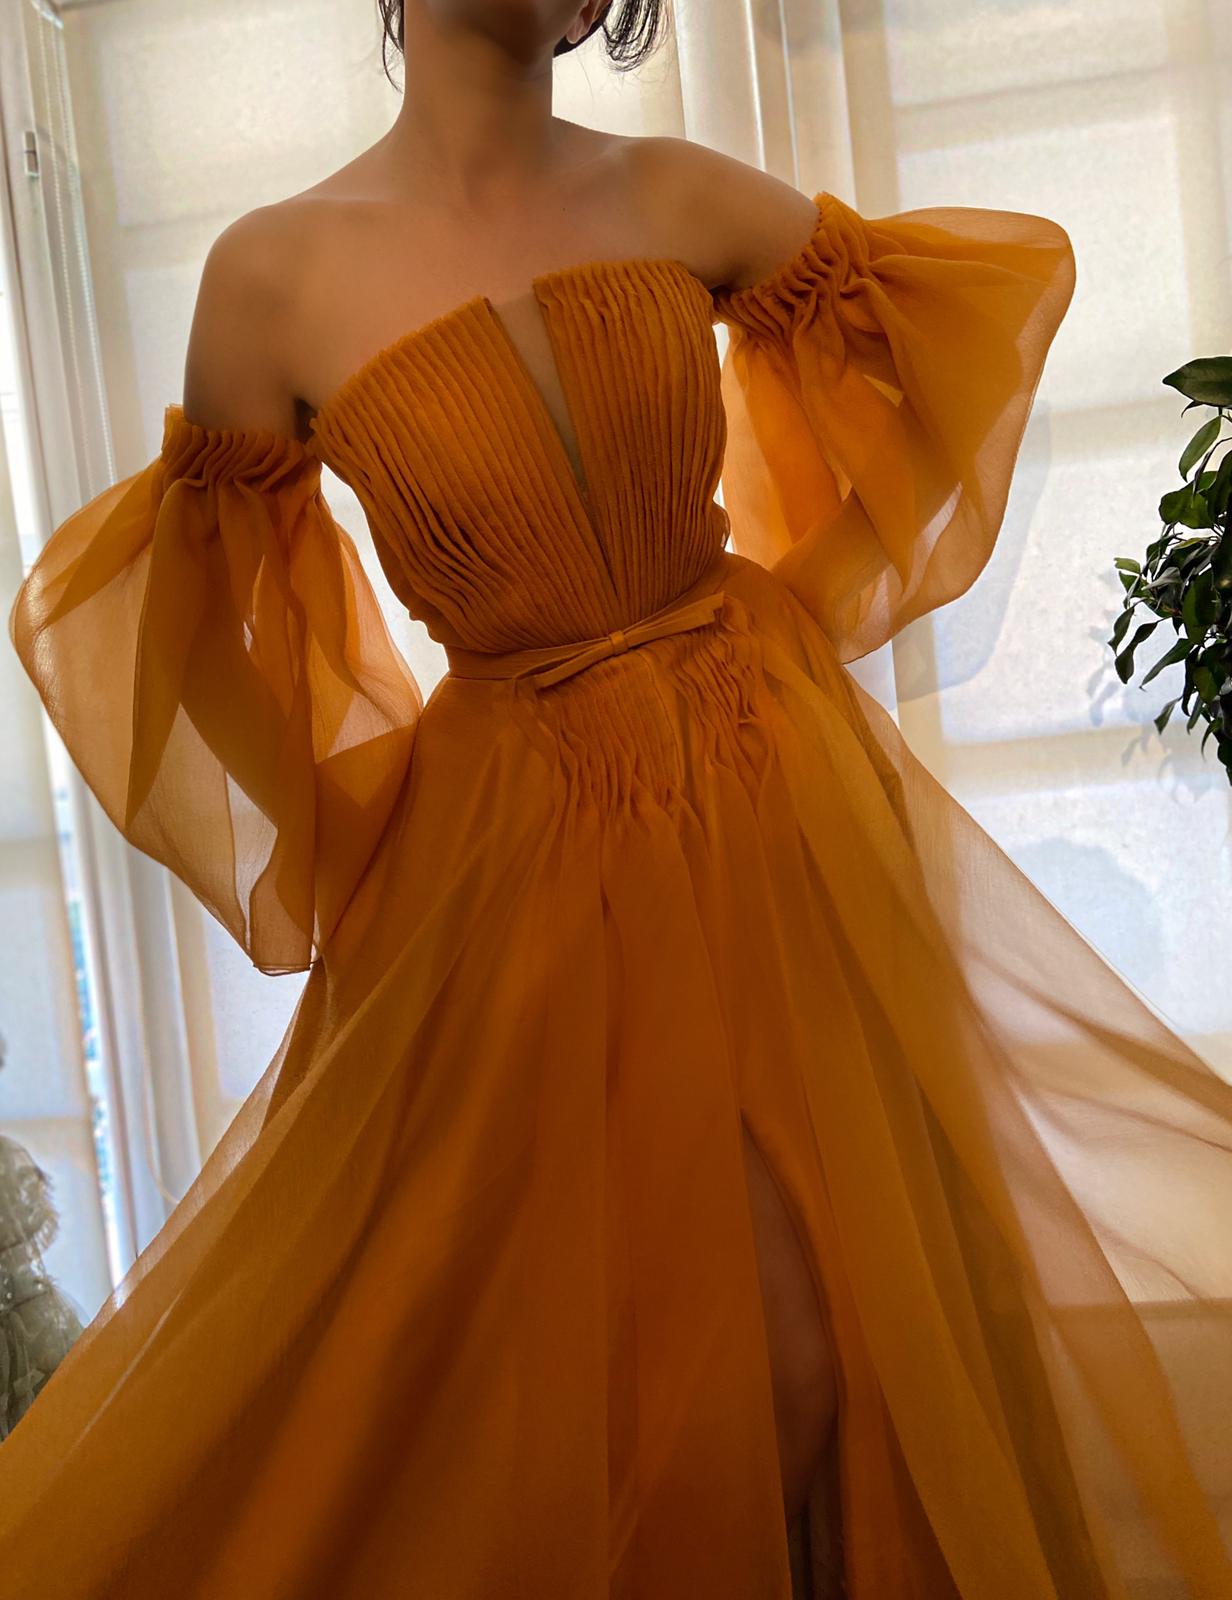 Orange A-Line dress with off the shoulder sleeves